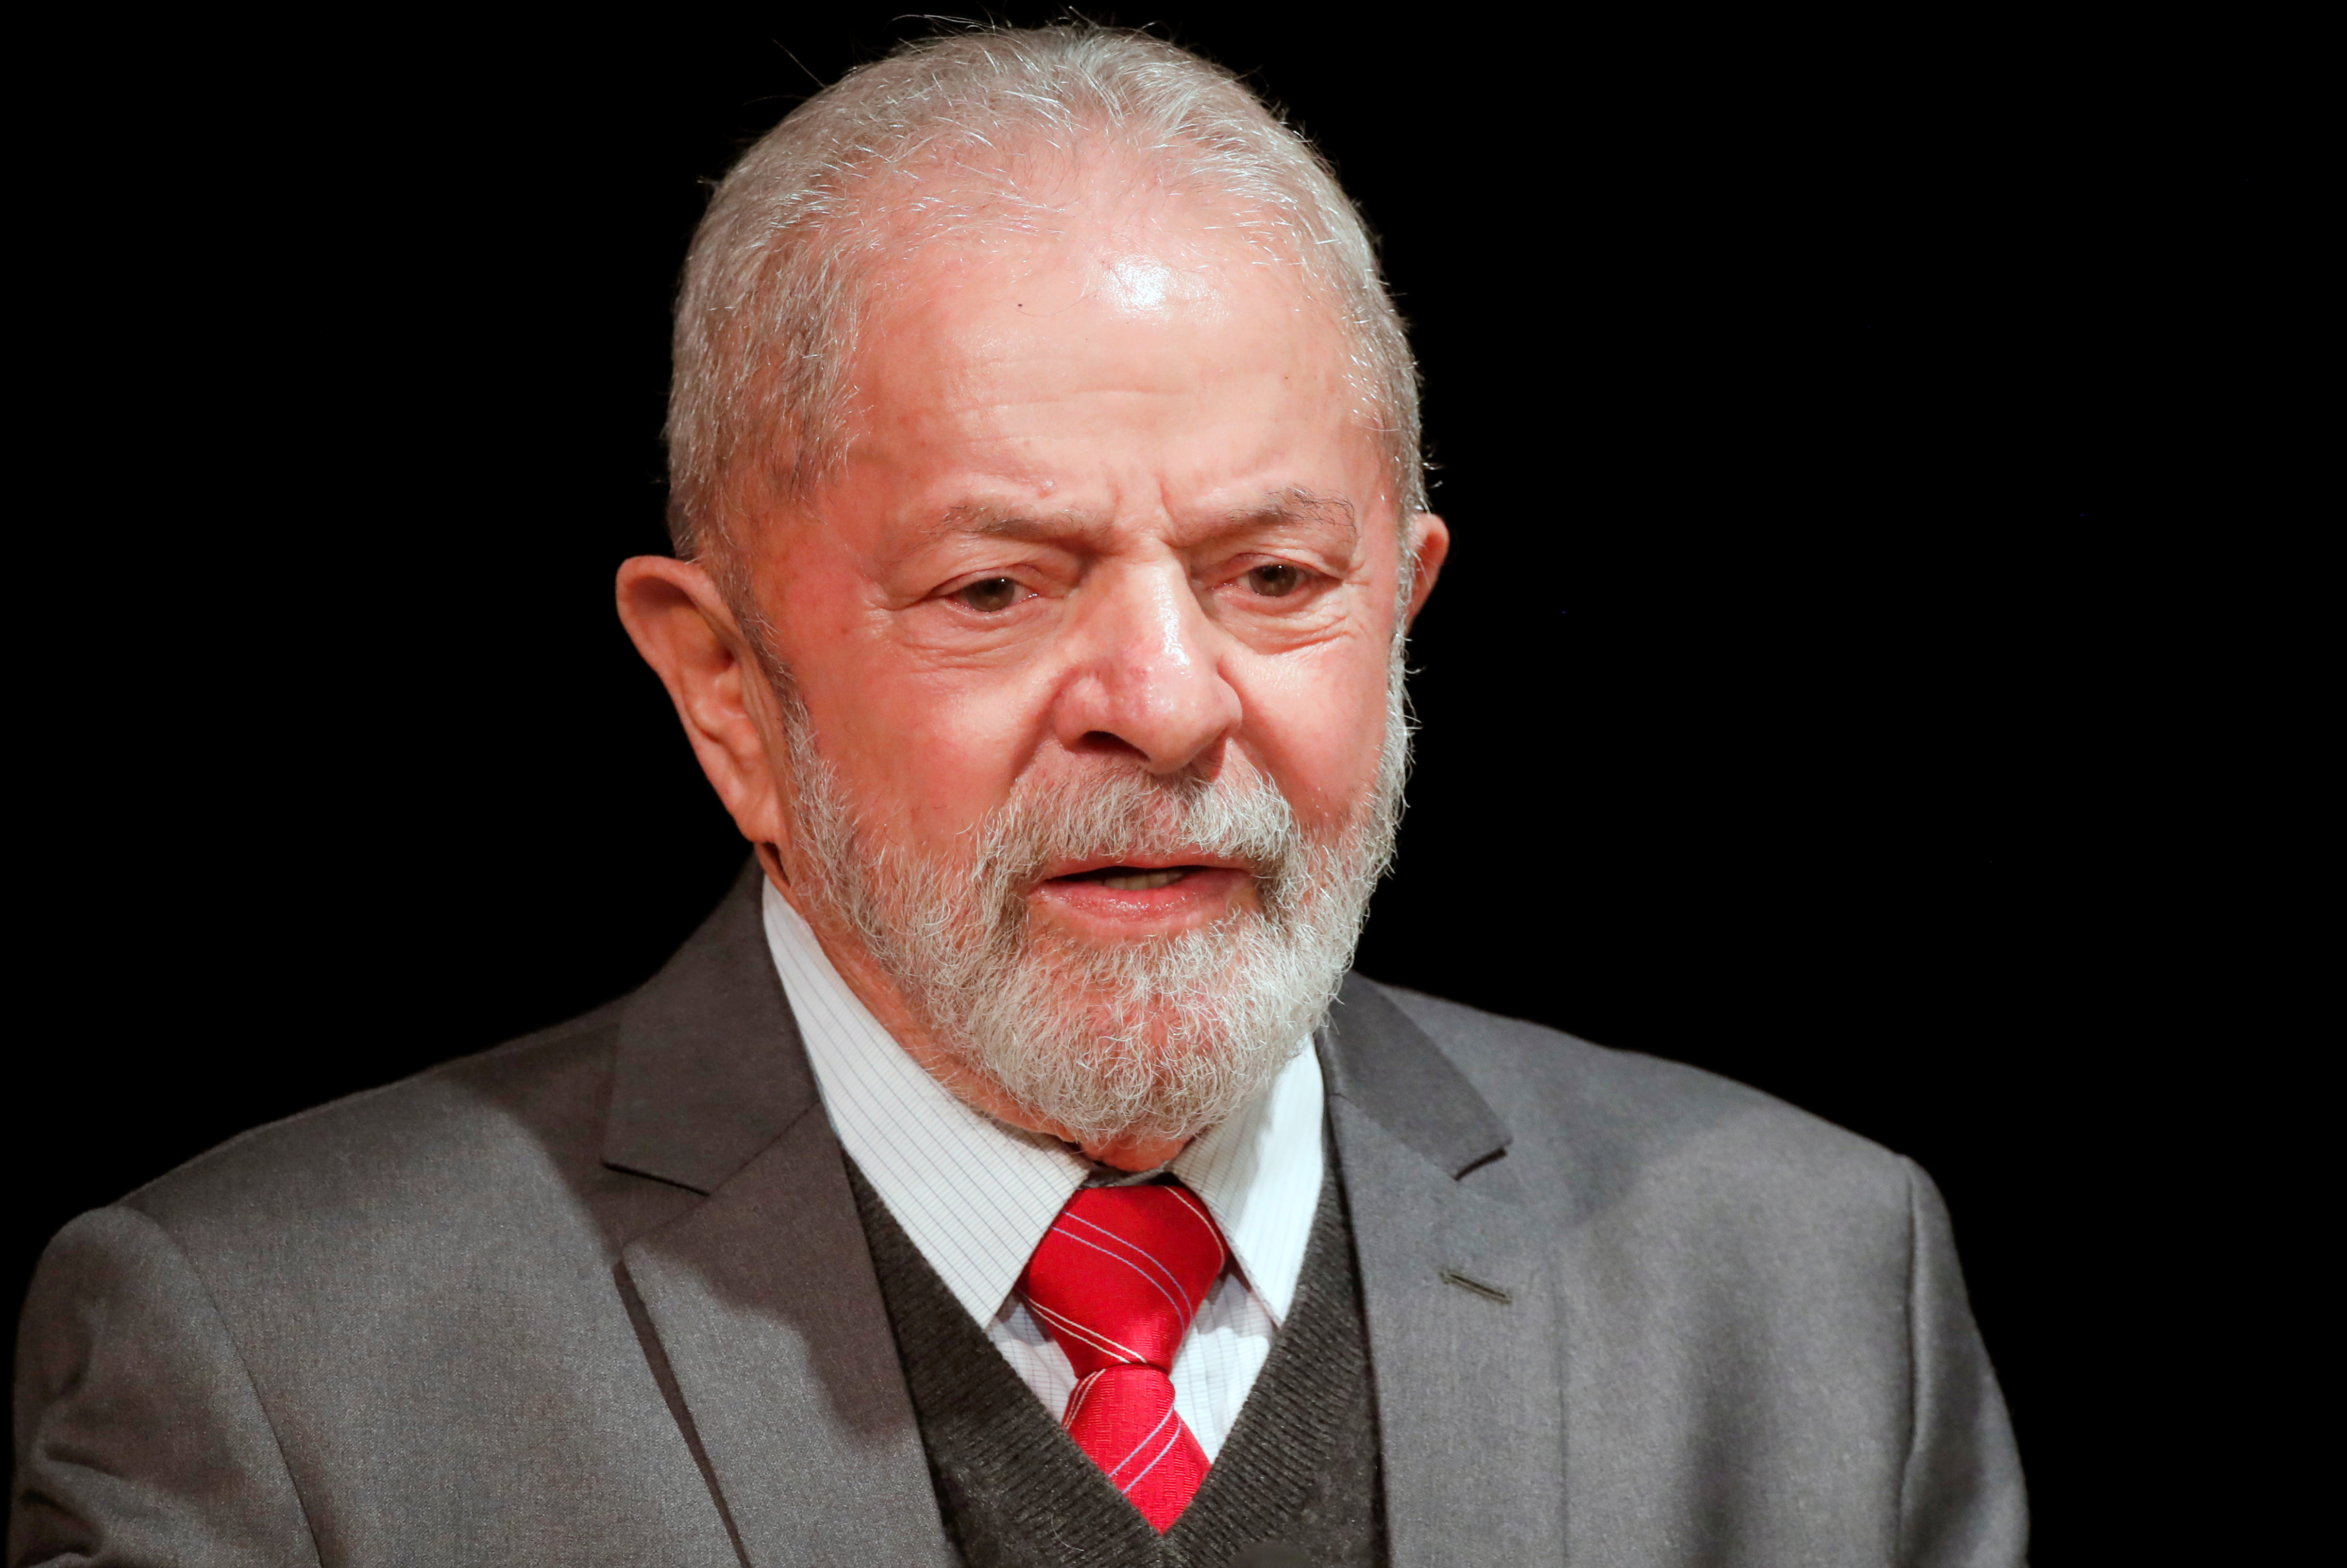 El ex presidente brasileño Lula da Silva. Foto: REUTERS/Charles Platiau